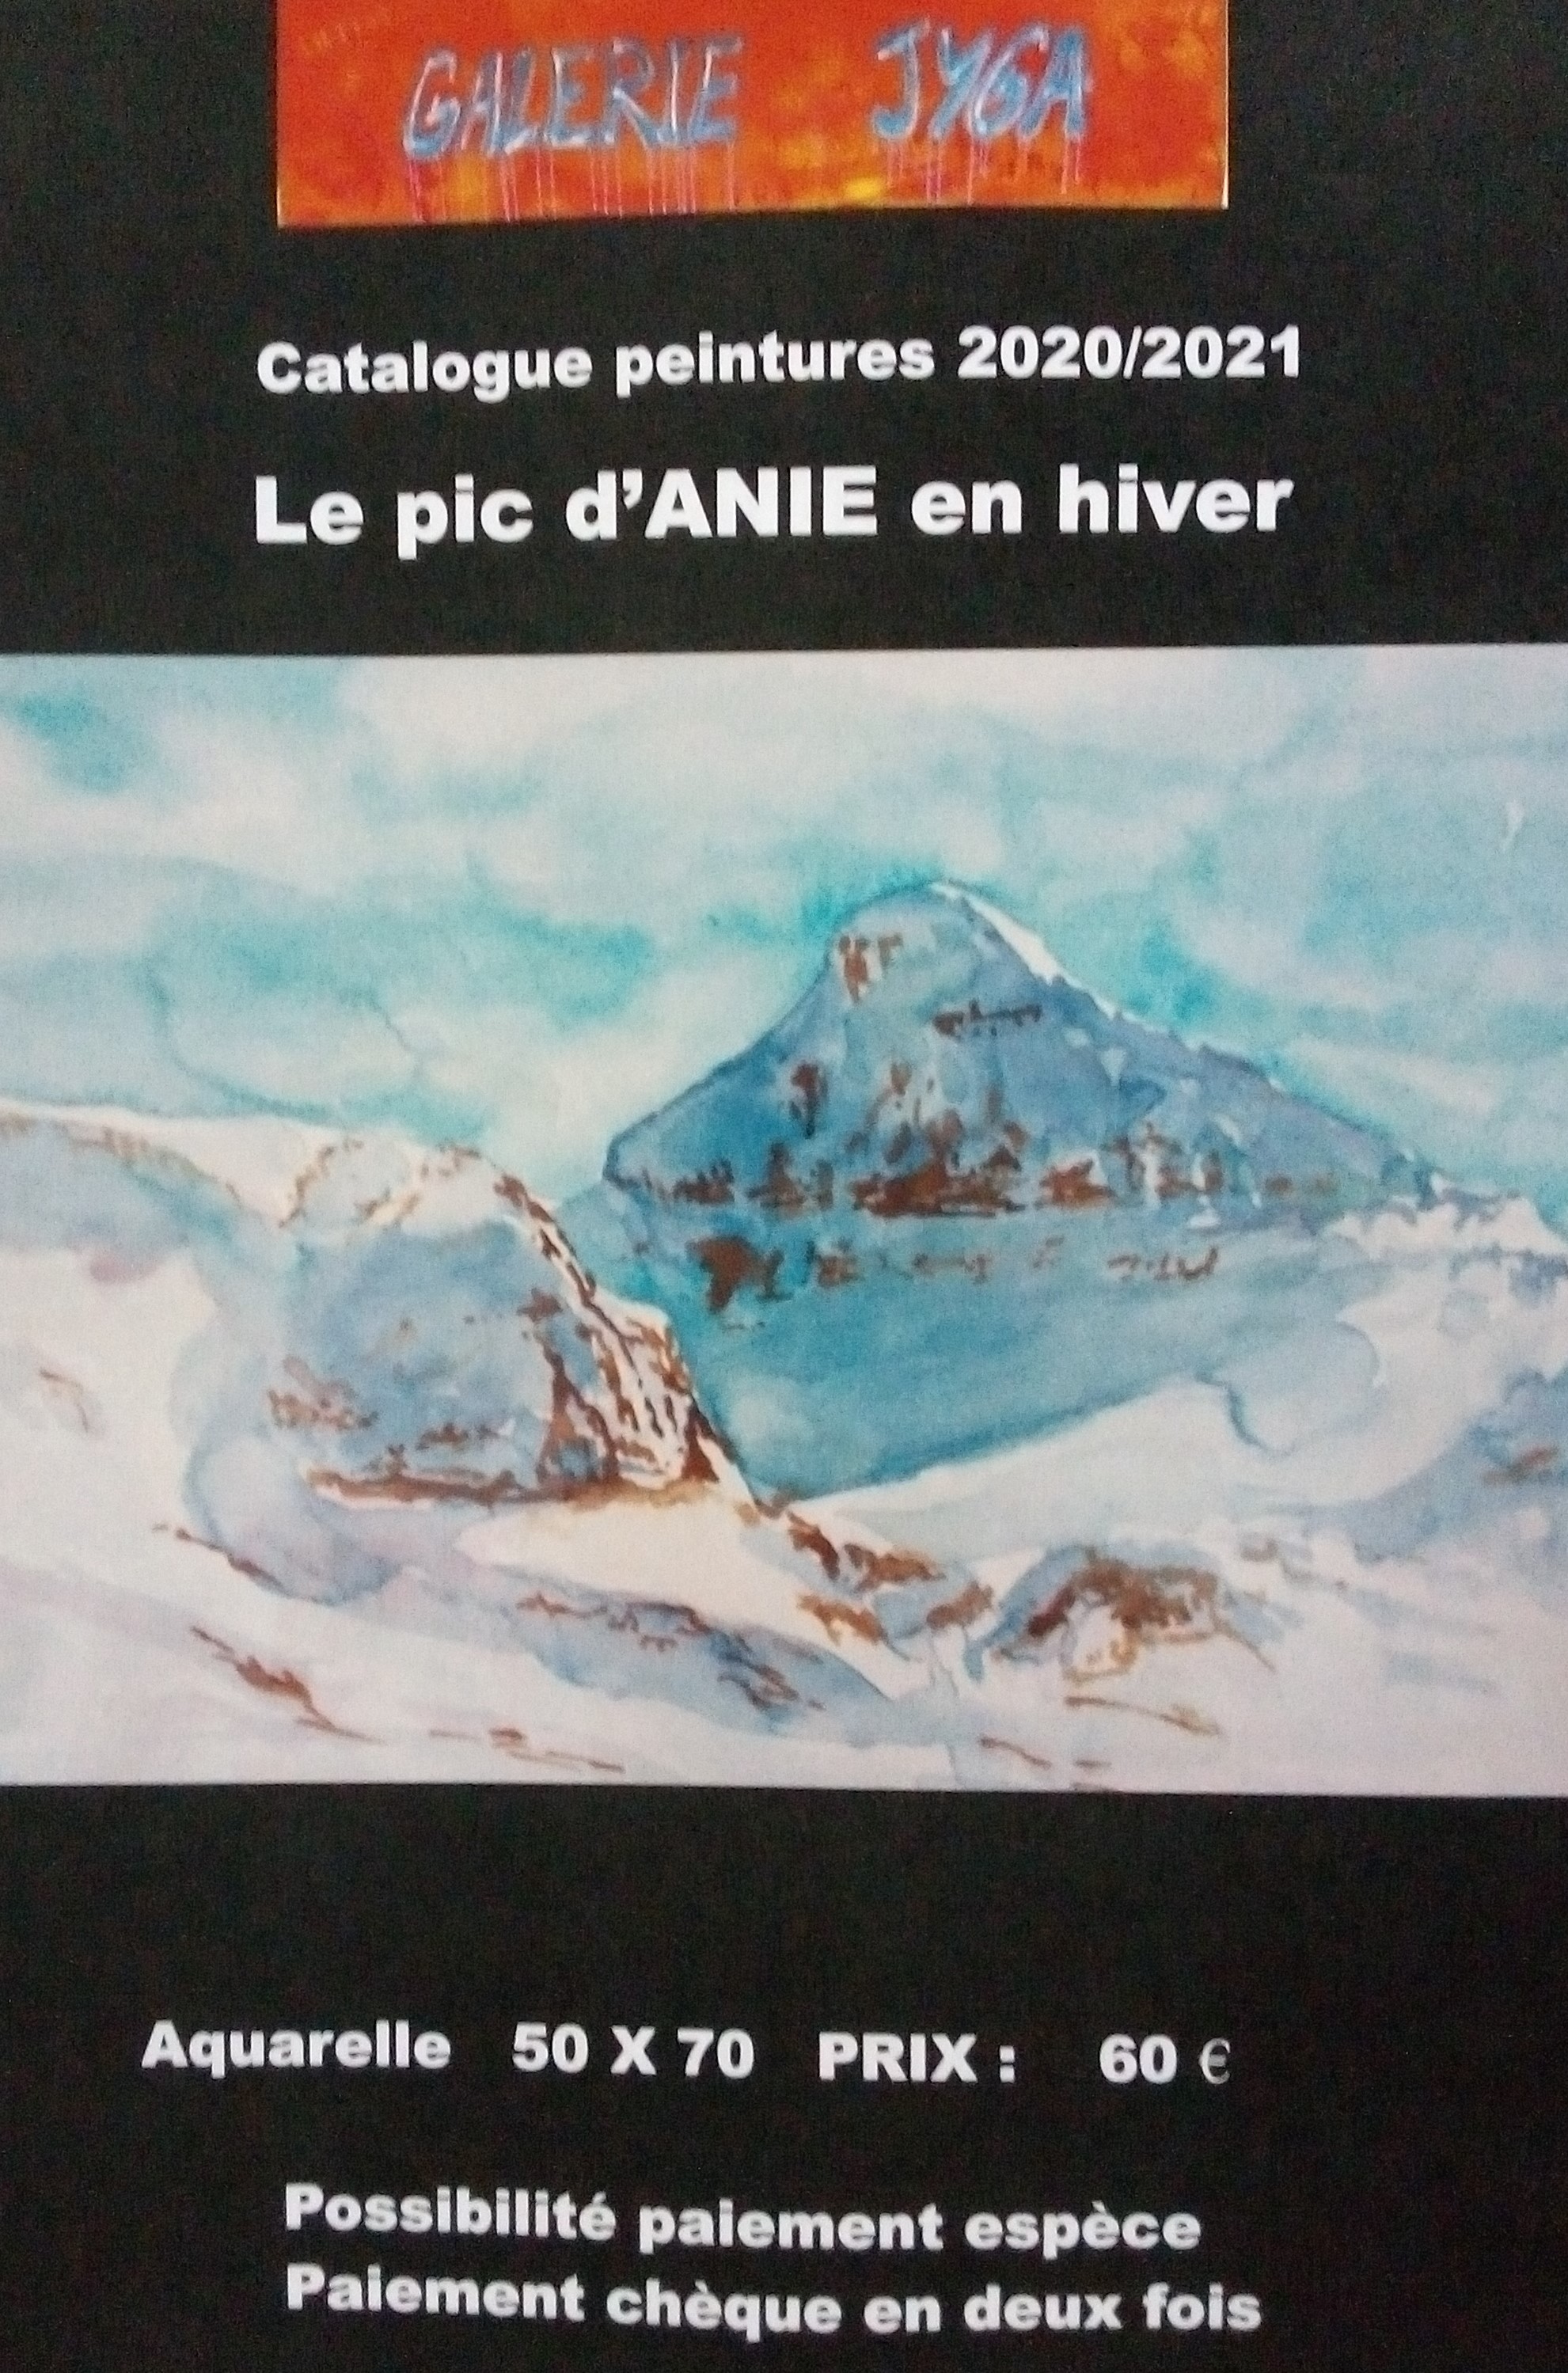 Exposition de peintures galerie Jyga - OLORON-SAINTE-MARIE